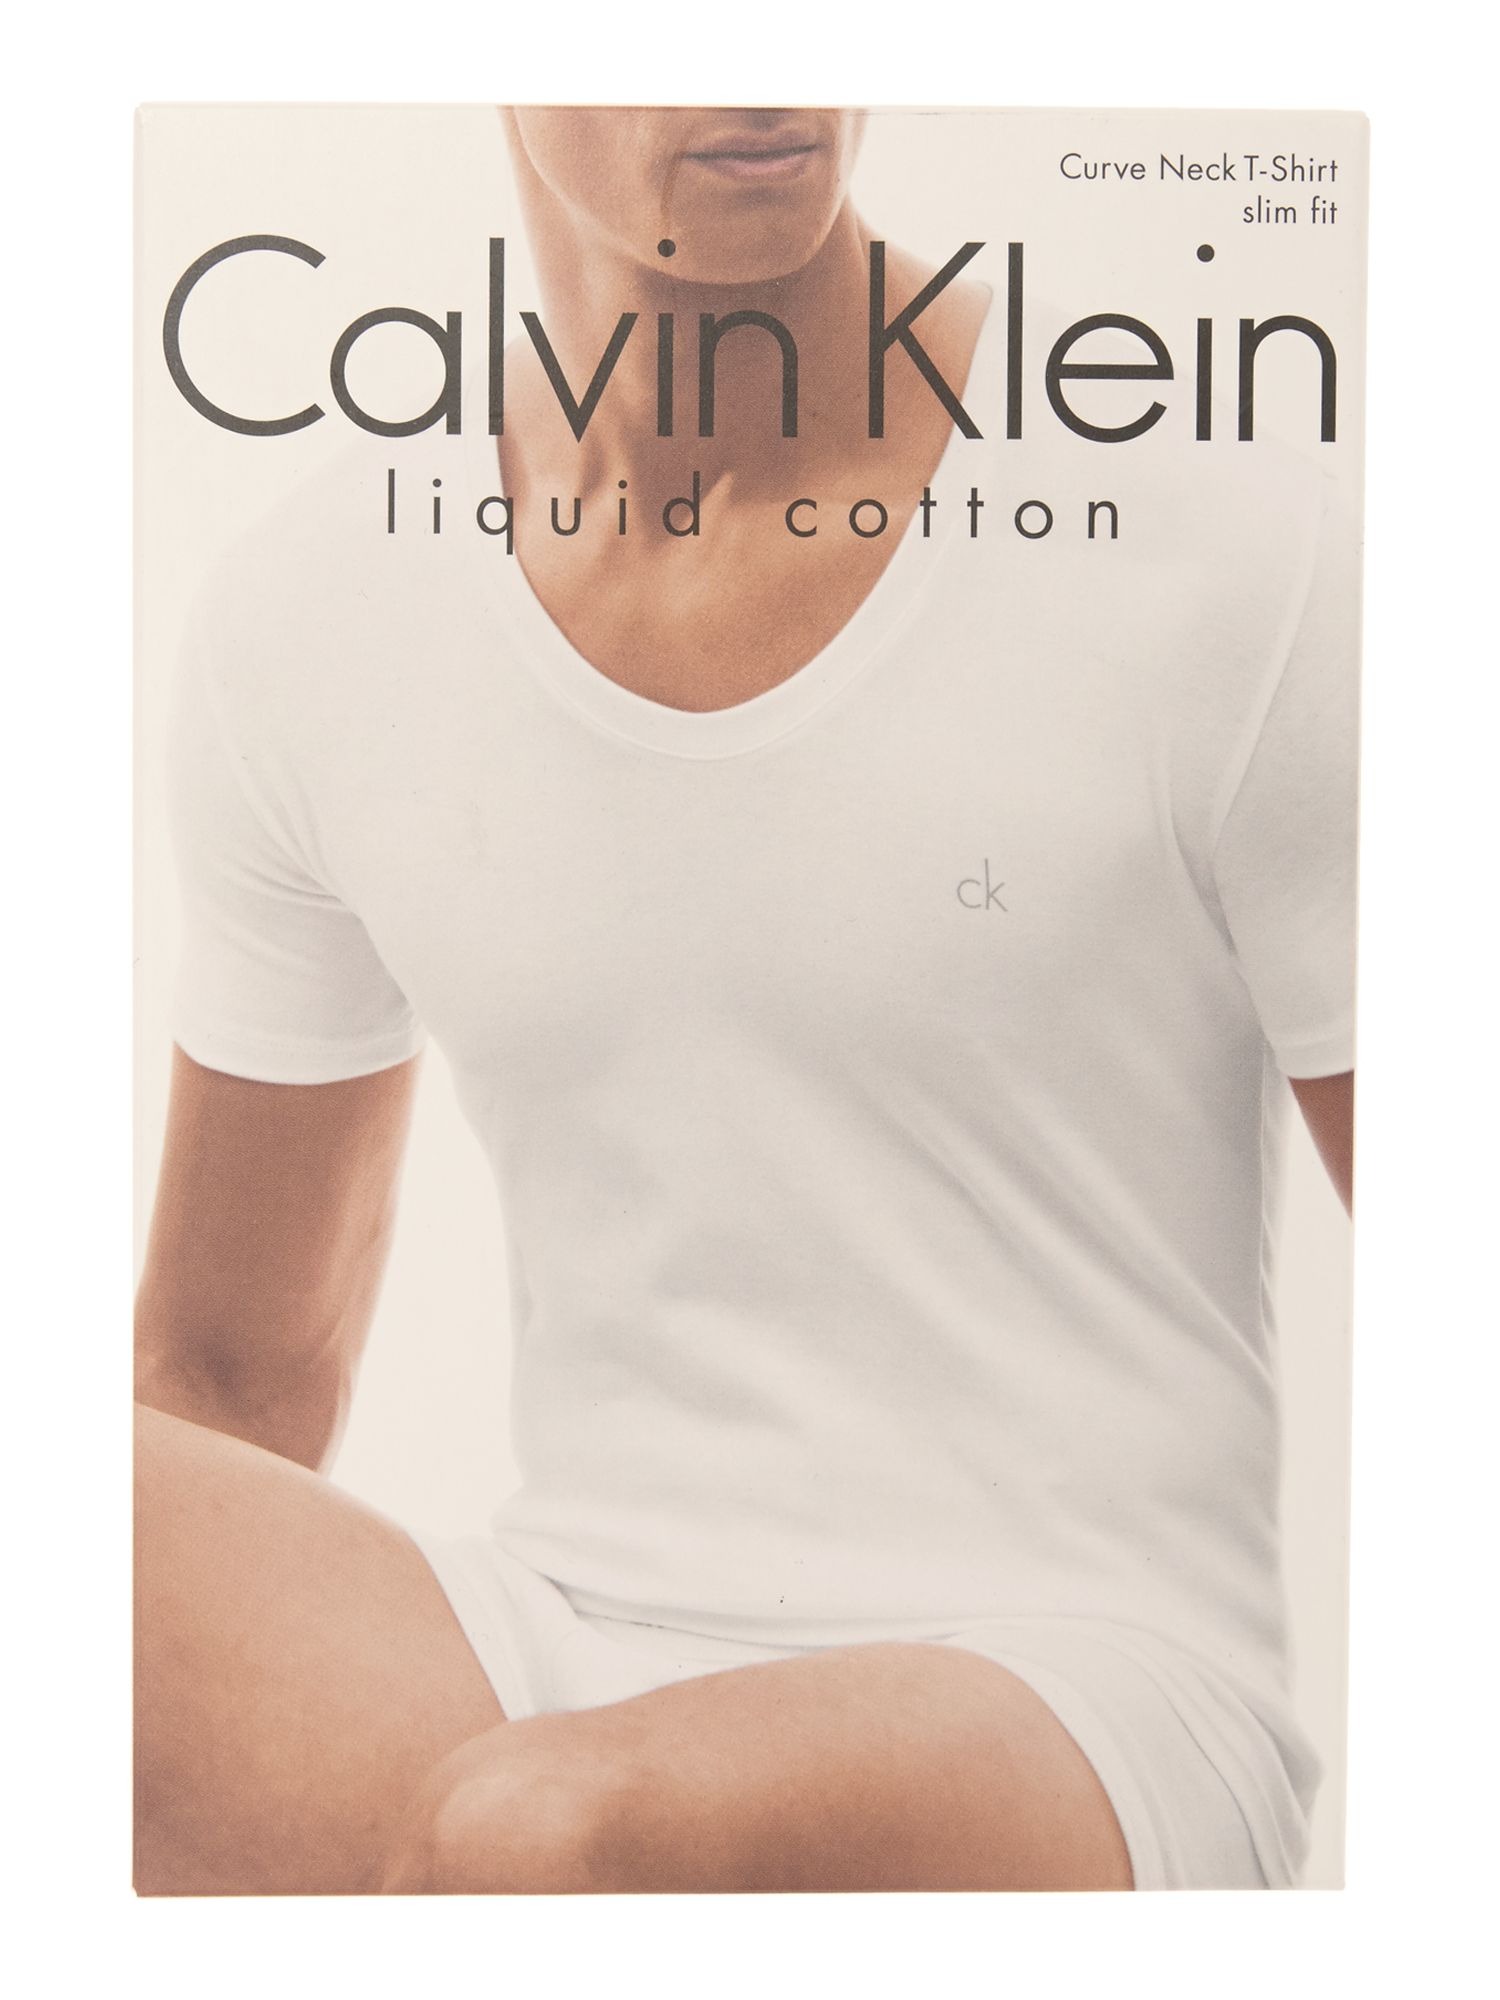 calvin klein liquid cotton